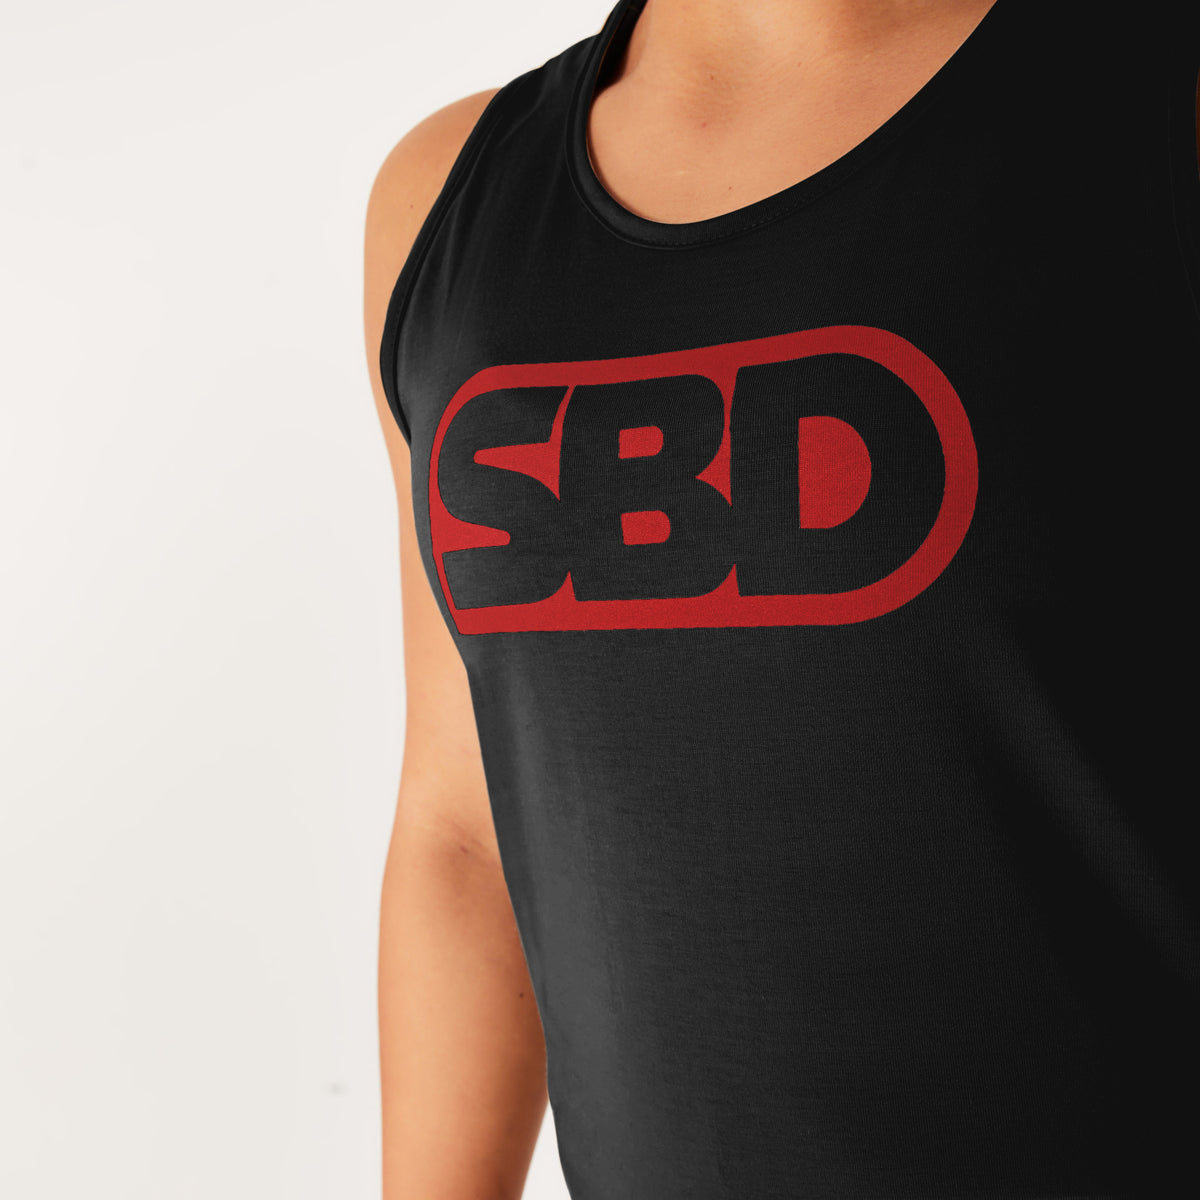 SBD Tank Brand